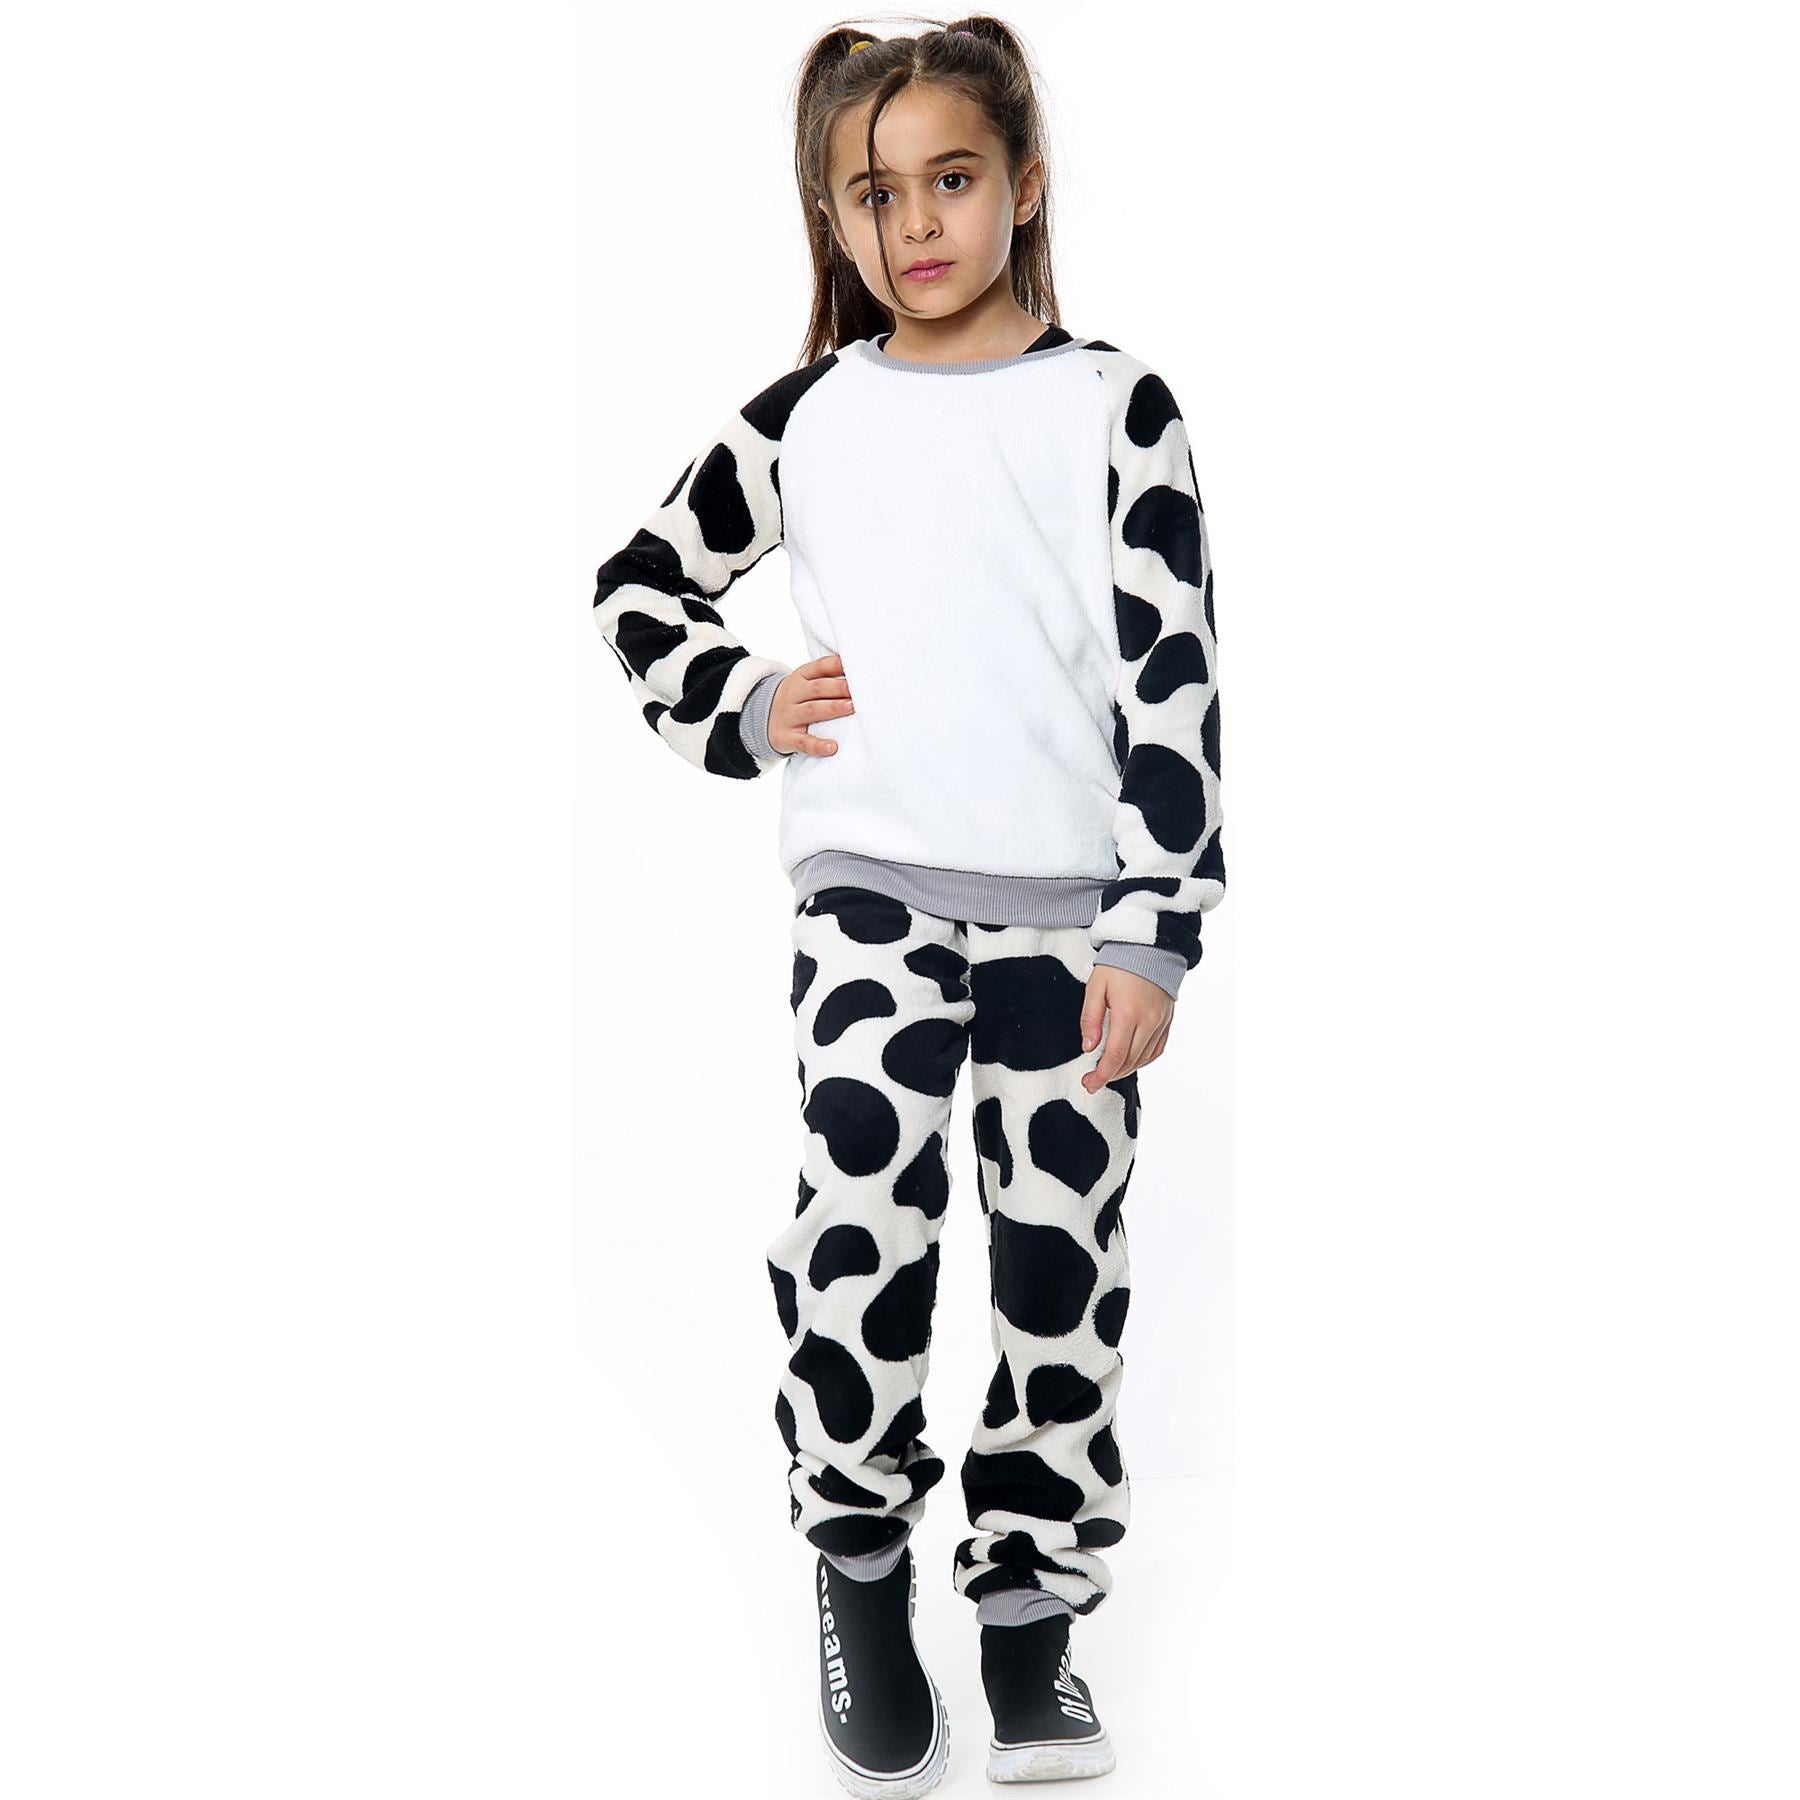 Kids Cow Print Sleeve Pyjamas Sleepsuit Costume For Girls Boys Age 5-13 Years